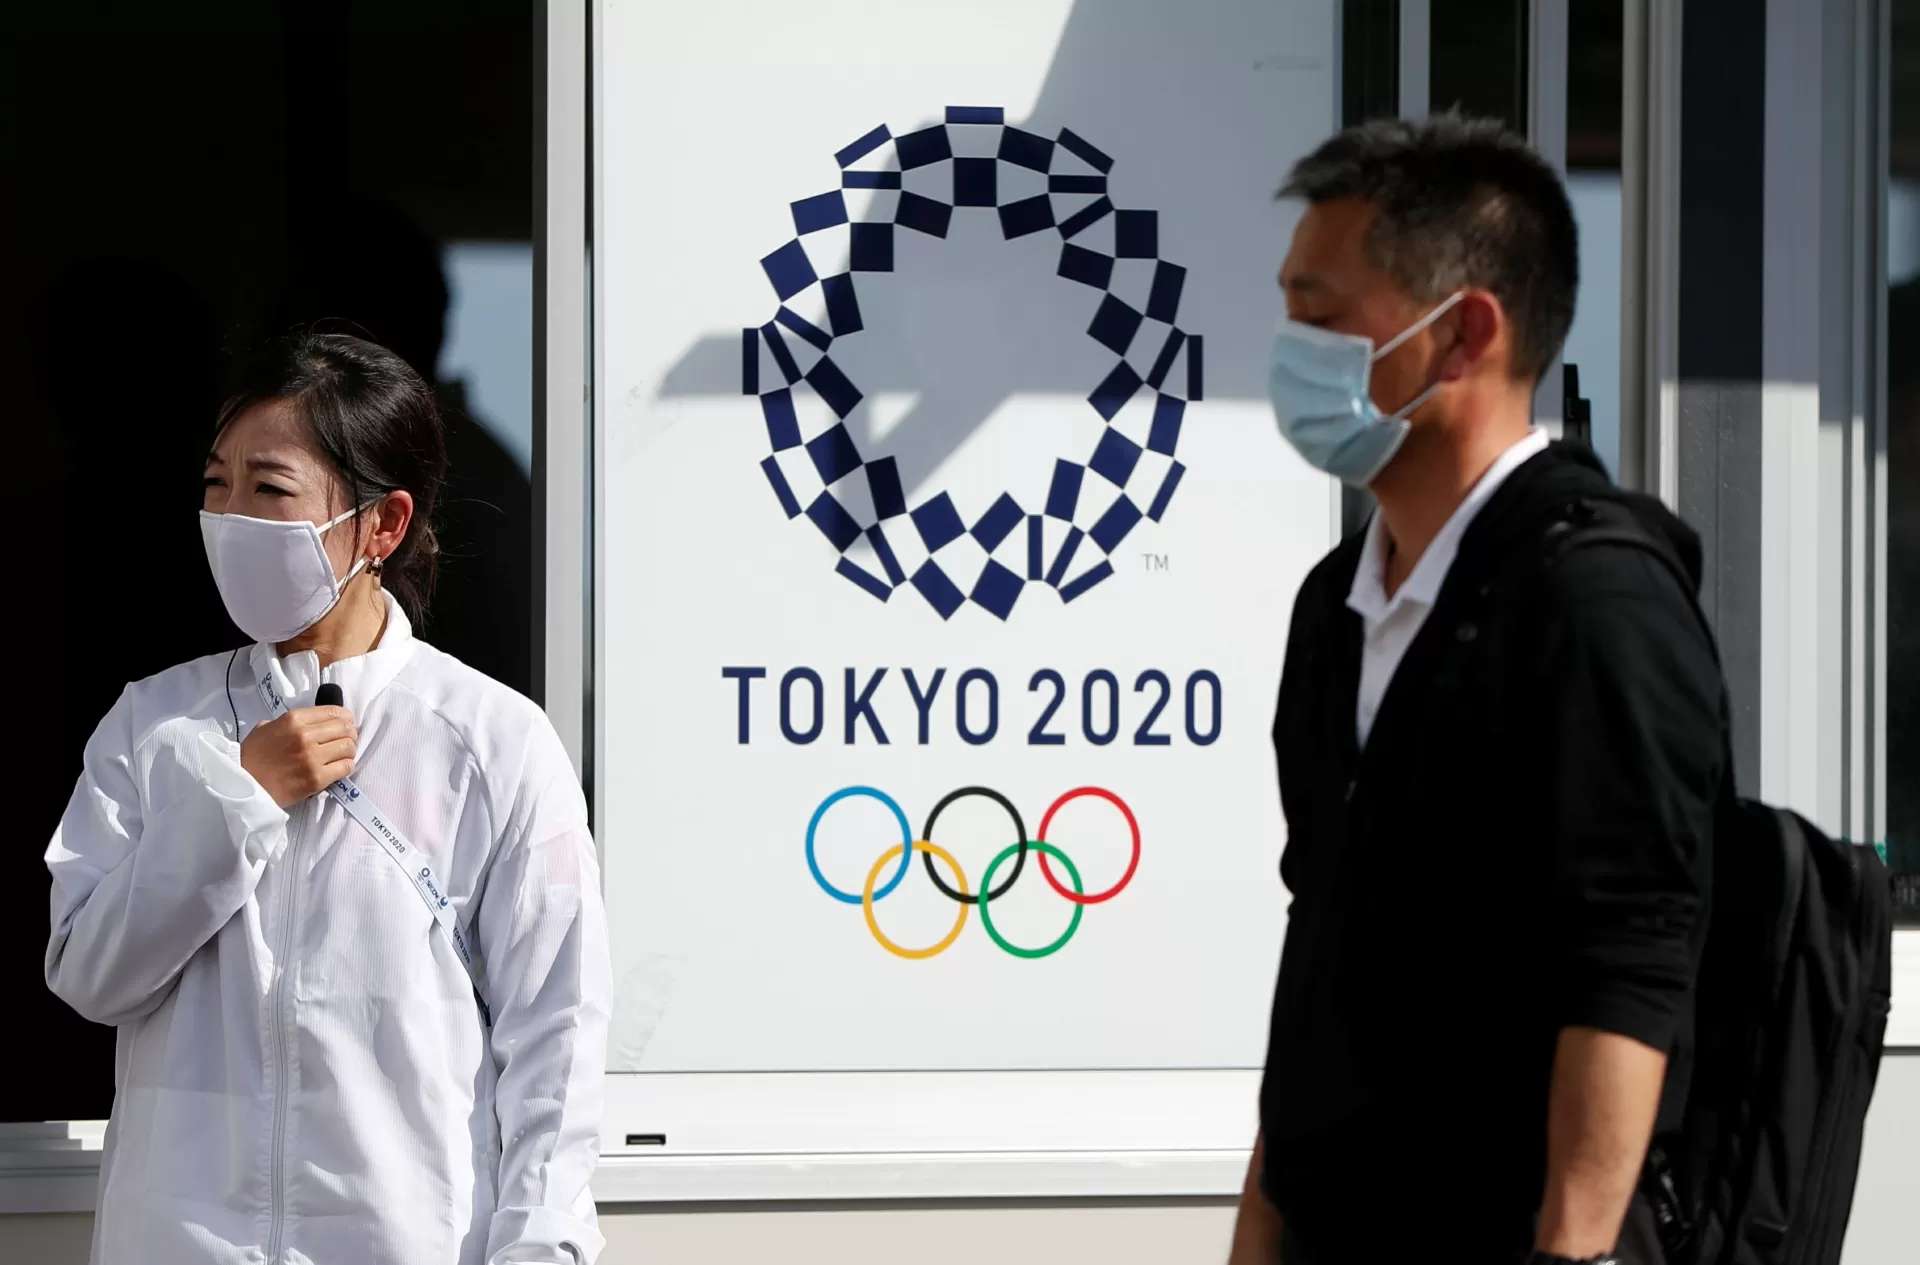 Descubra as principais curiosidades sobre as Olimpíadas de Tóquio